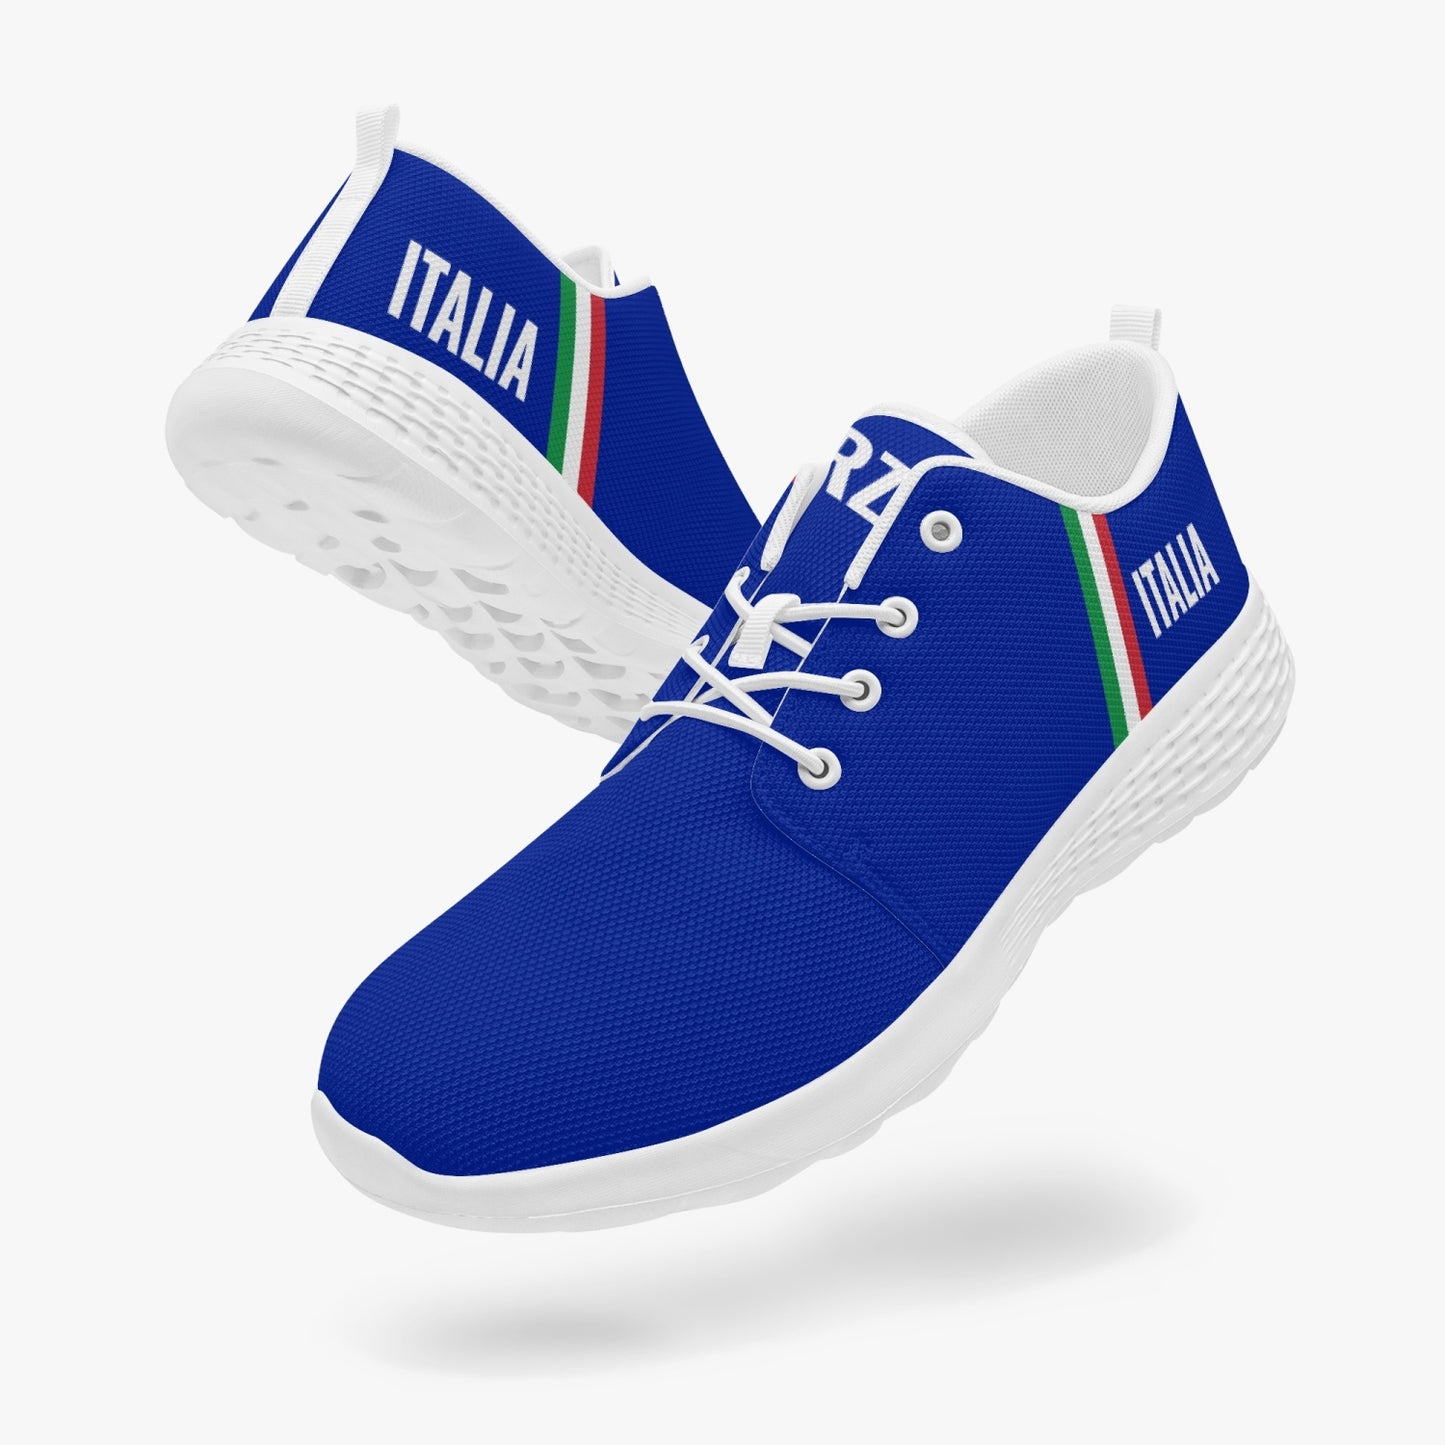 Italy Running Shoes - Forza Italia - Blue - men's /women's sizes